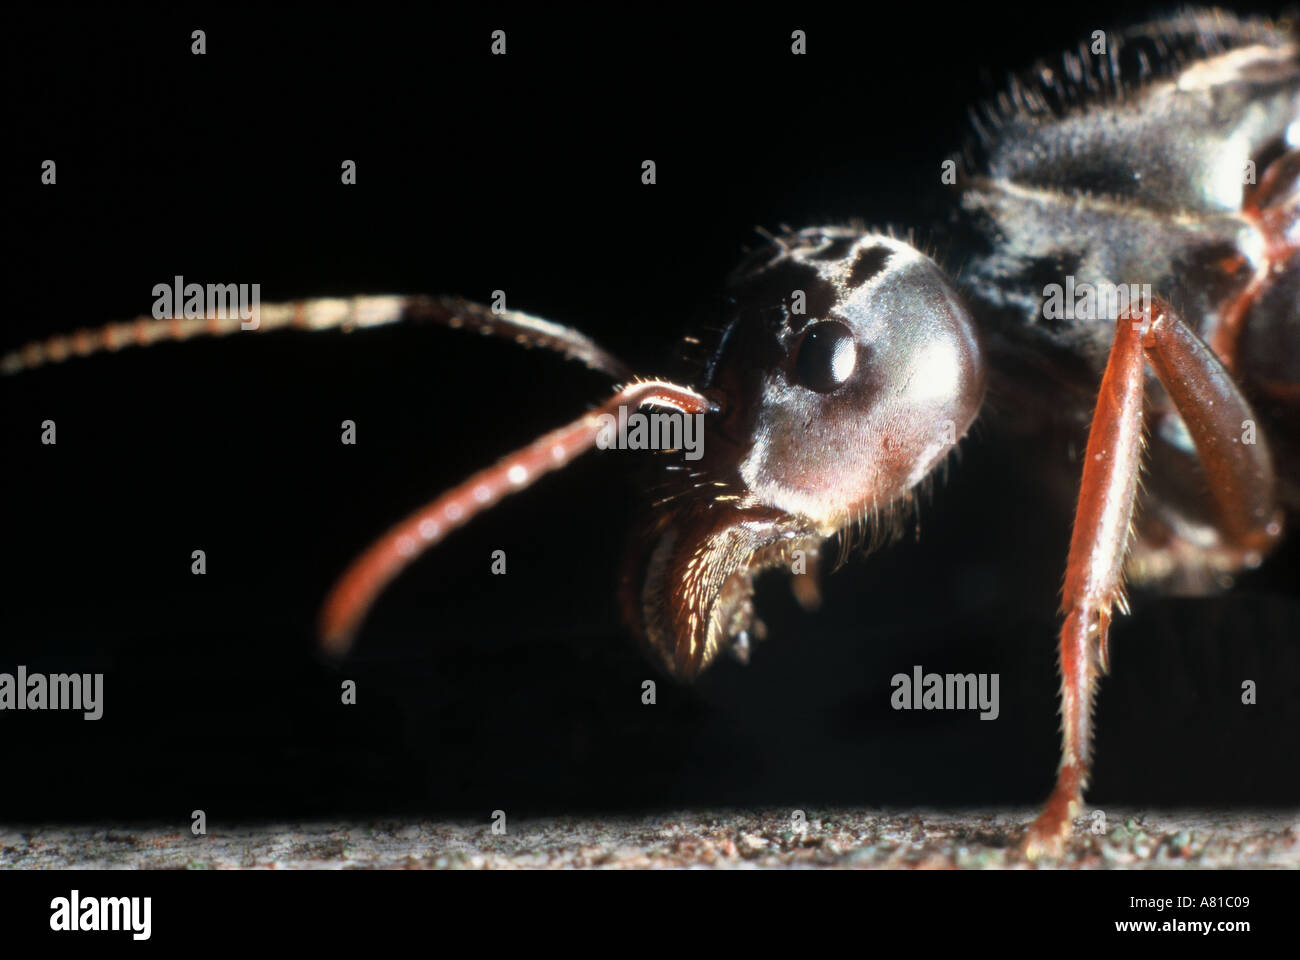 Queen ant portrait Stock Photo